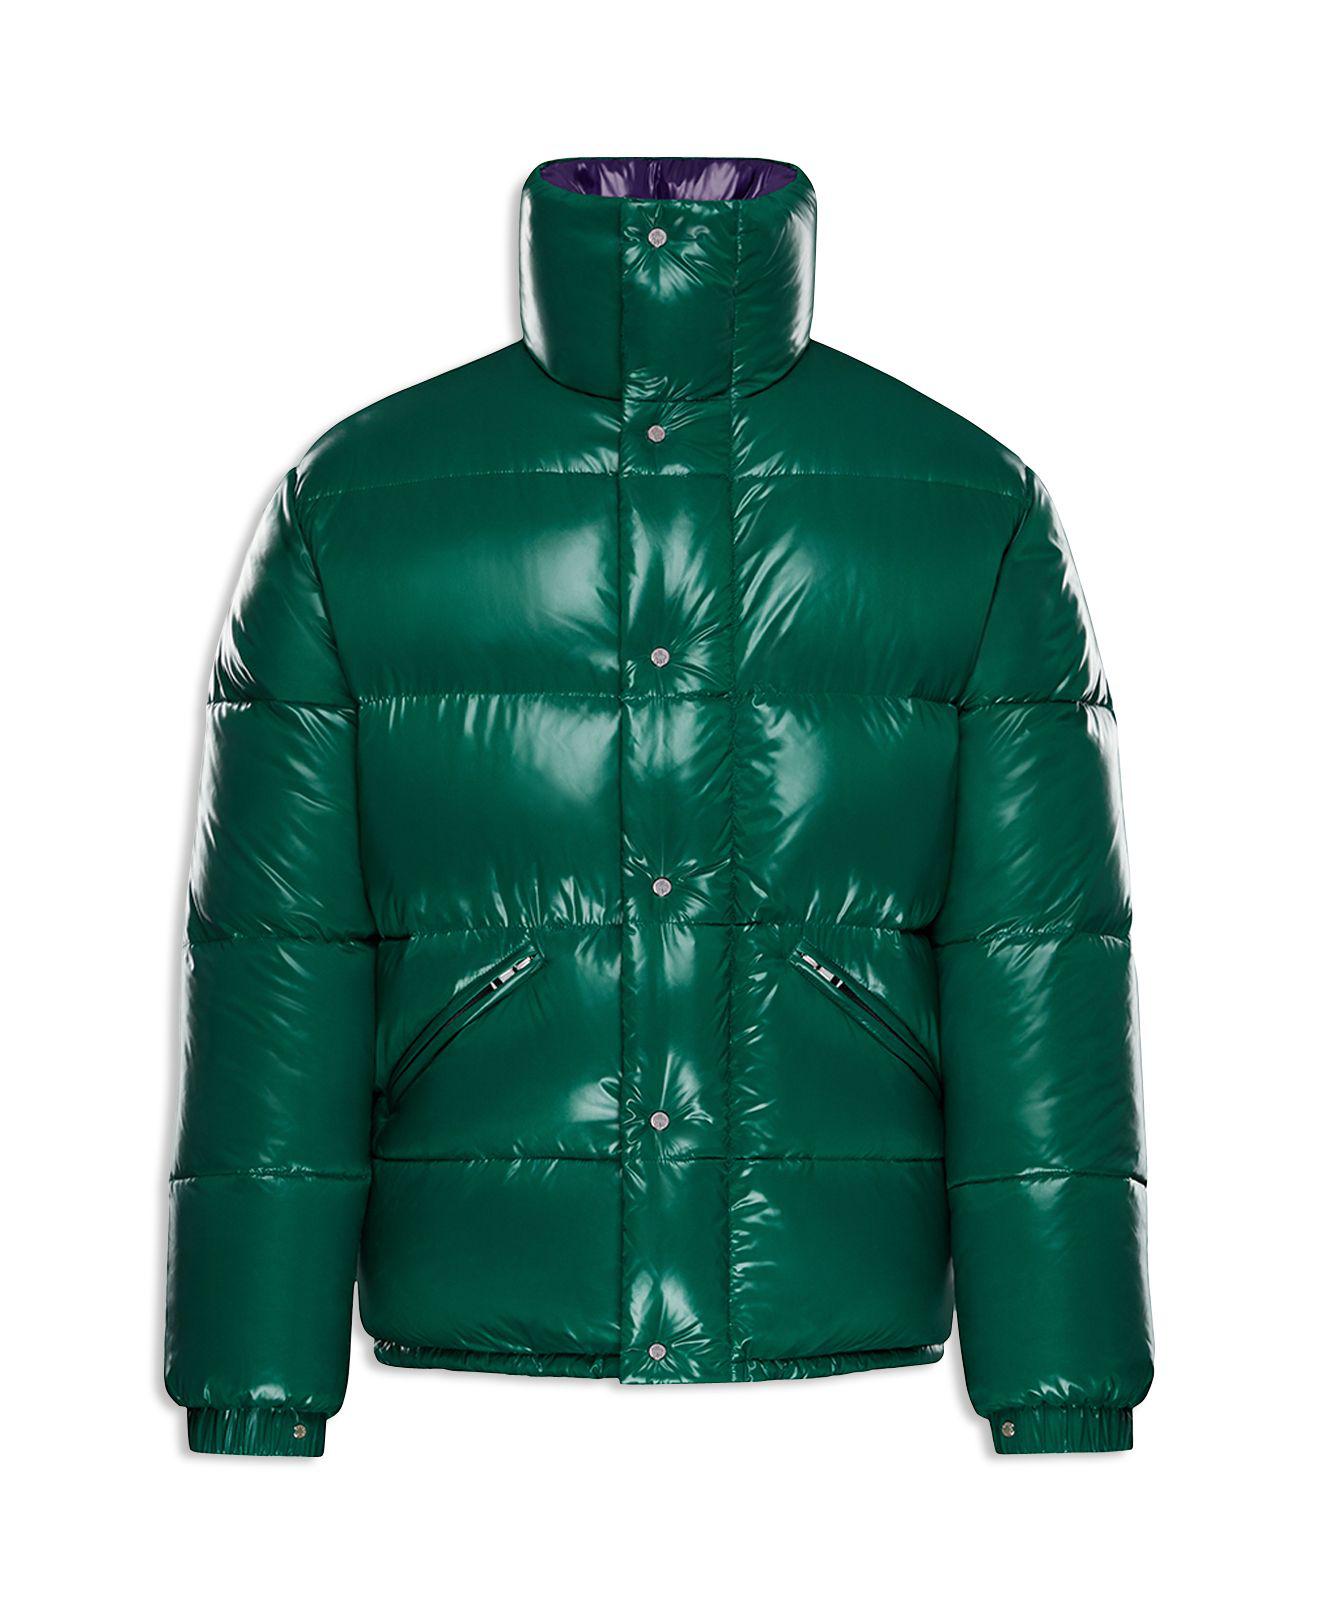 Moncler Dejan Puffer Jacket in Dark Green (Green) for Men - Lyst